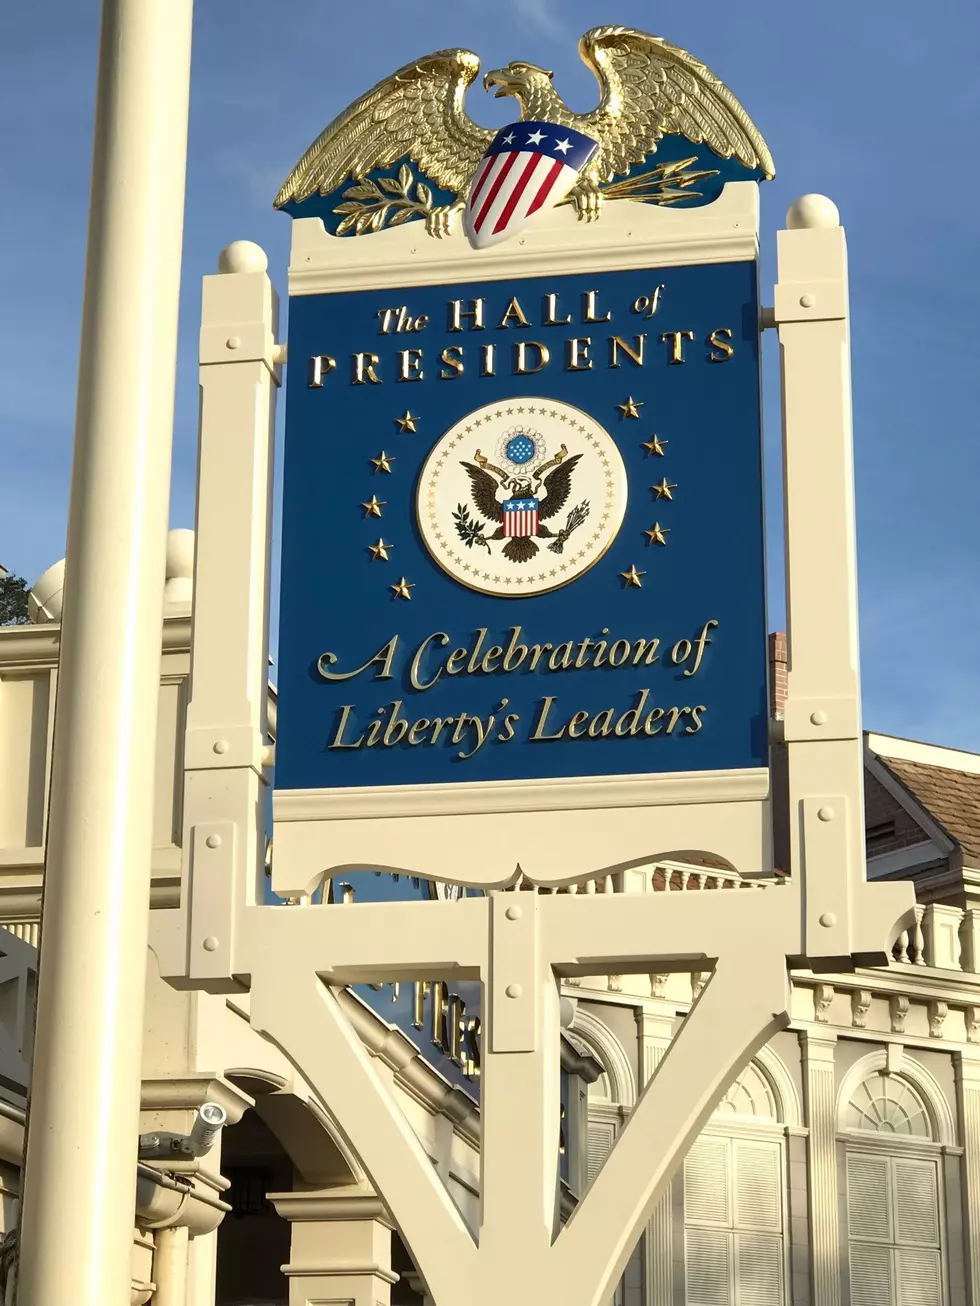 [Video] Disney's Hall of Presidents 